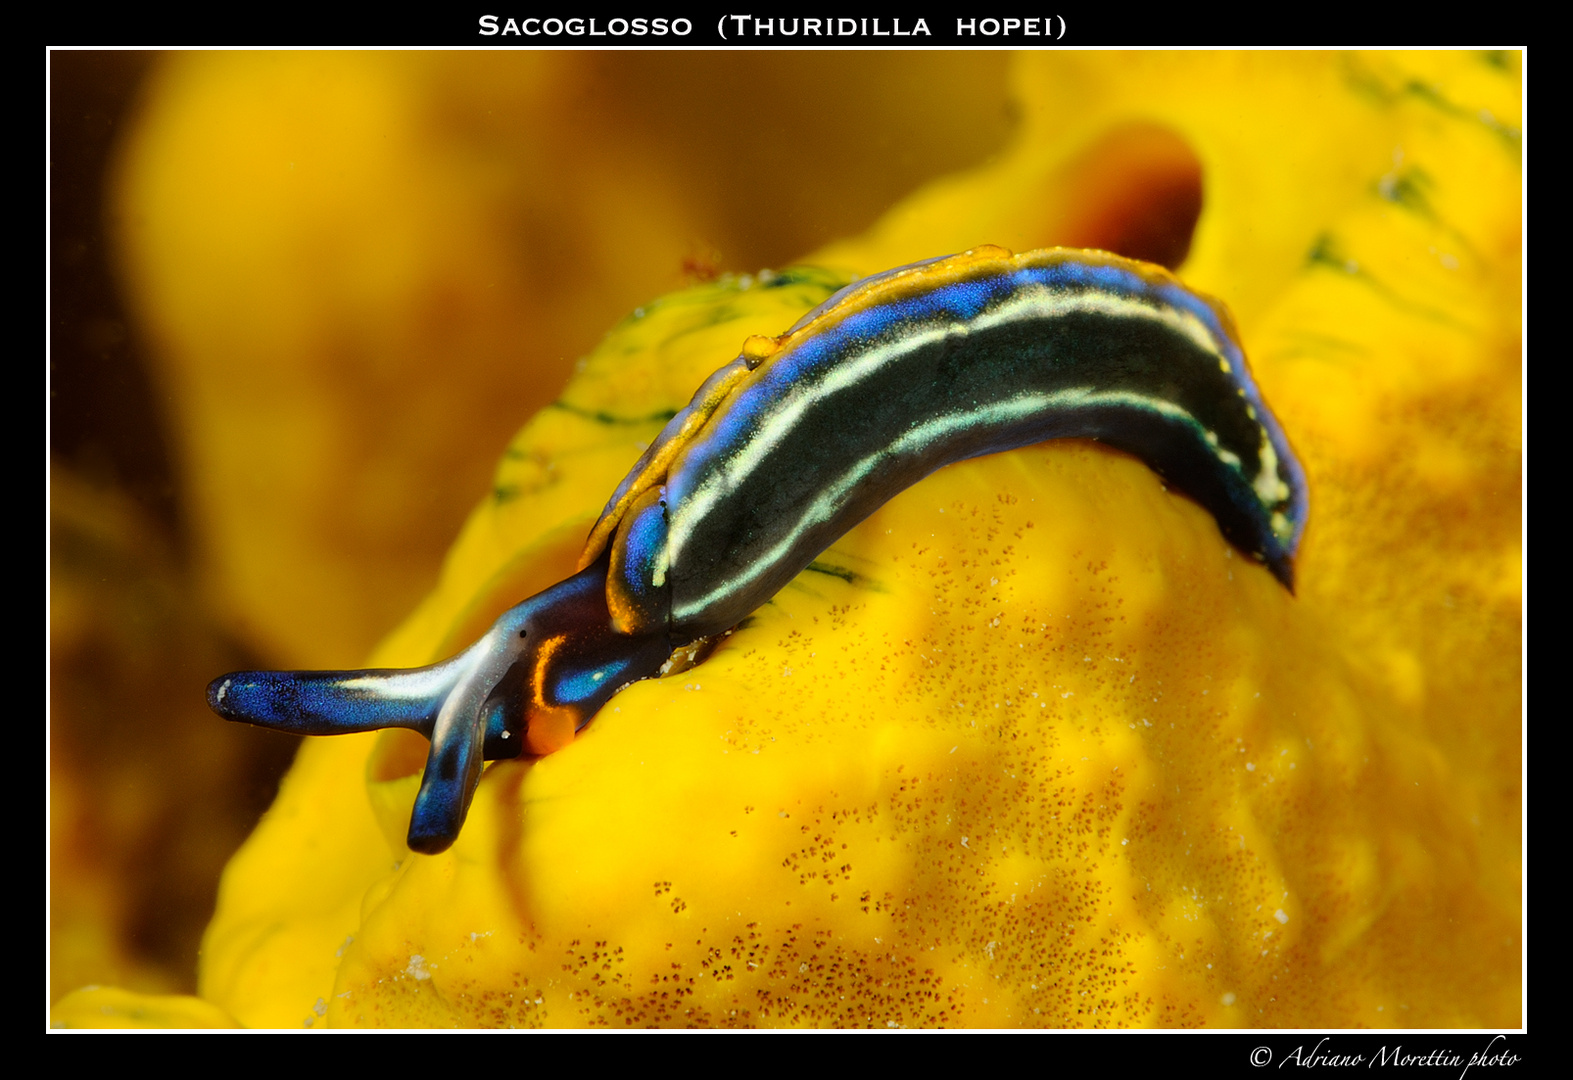 Sacoglosso mediterraneo (Thuridilla hopei)